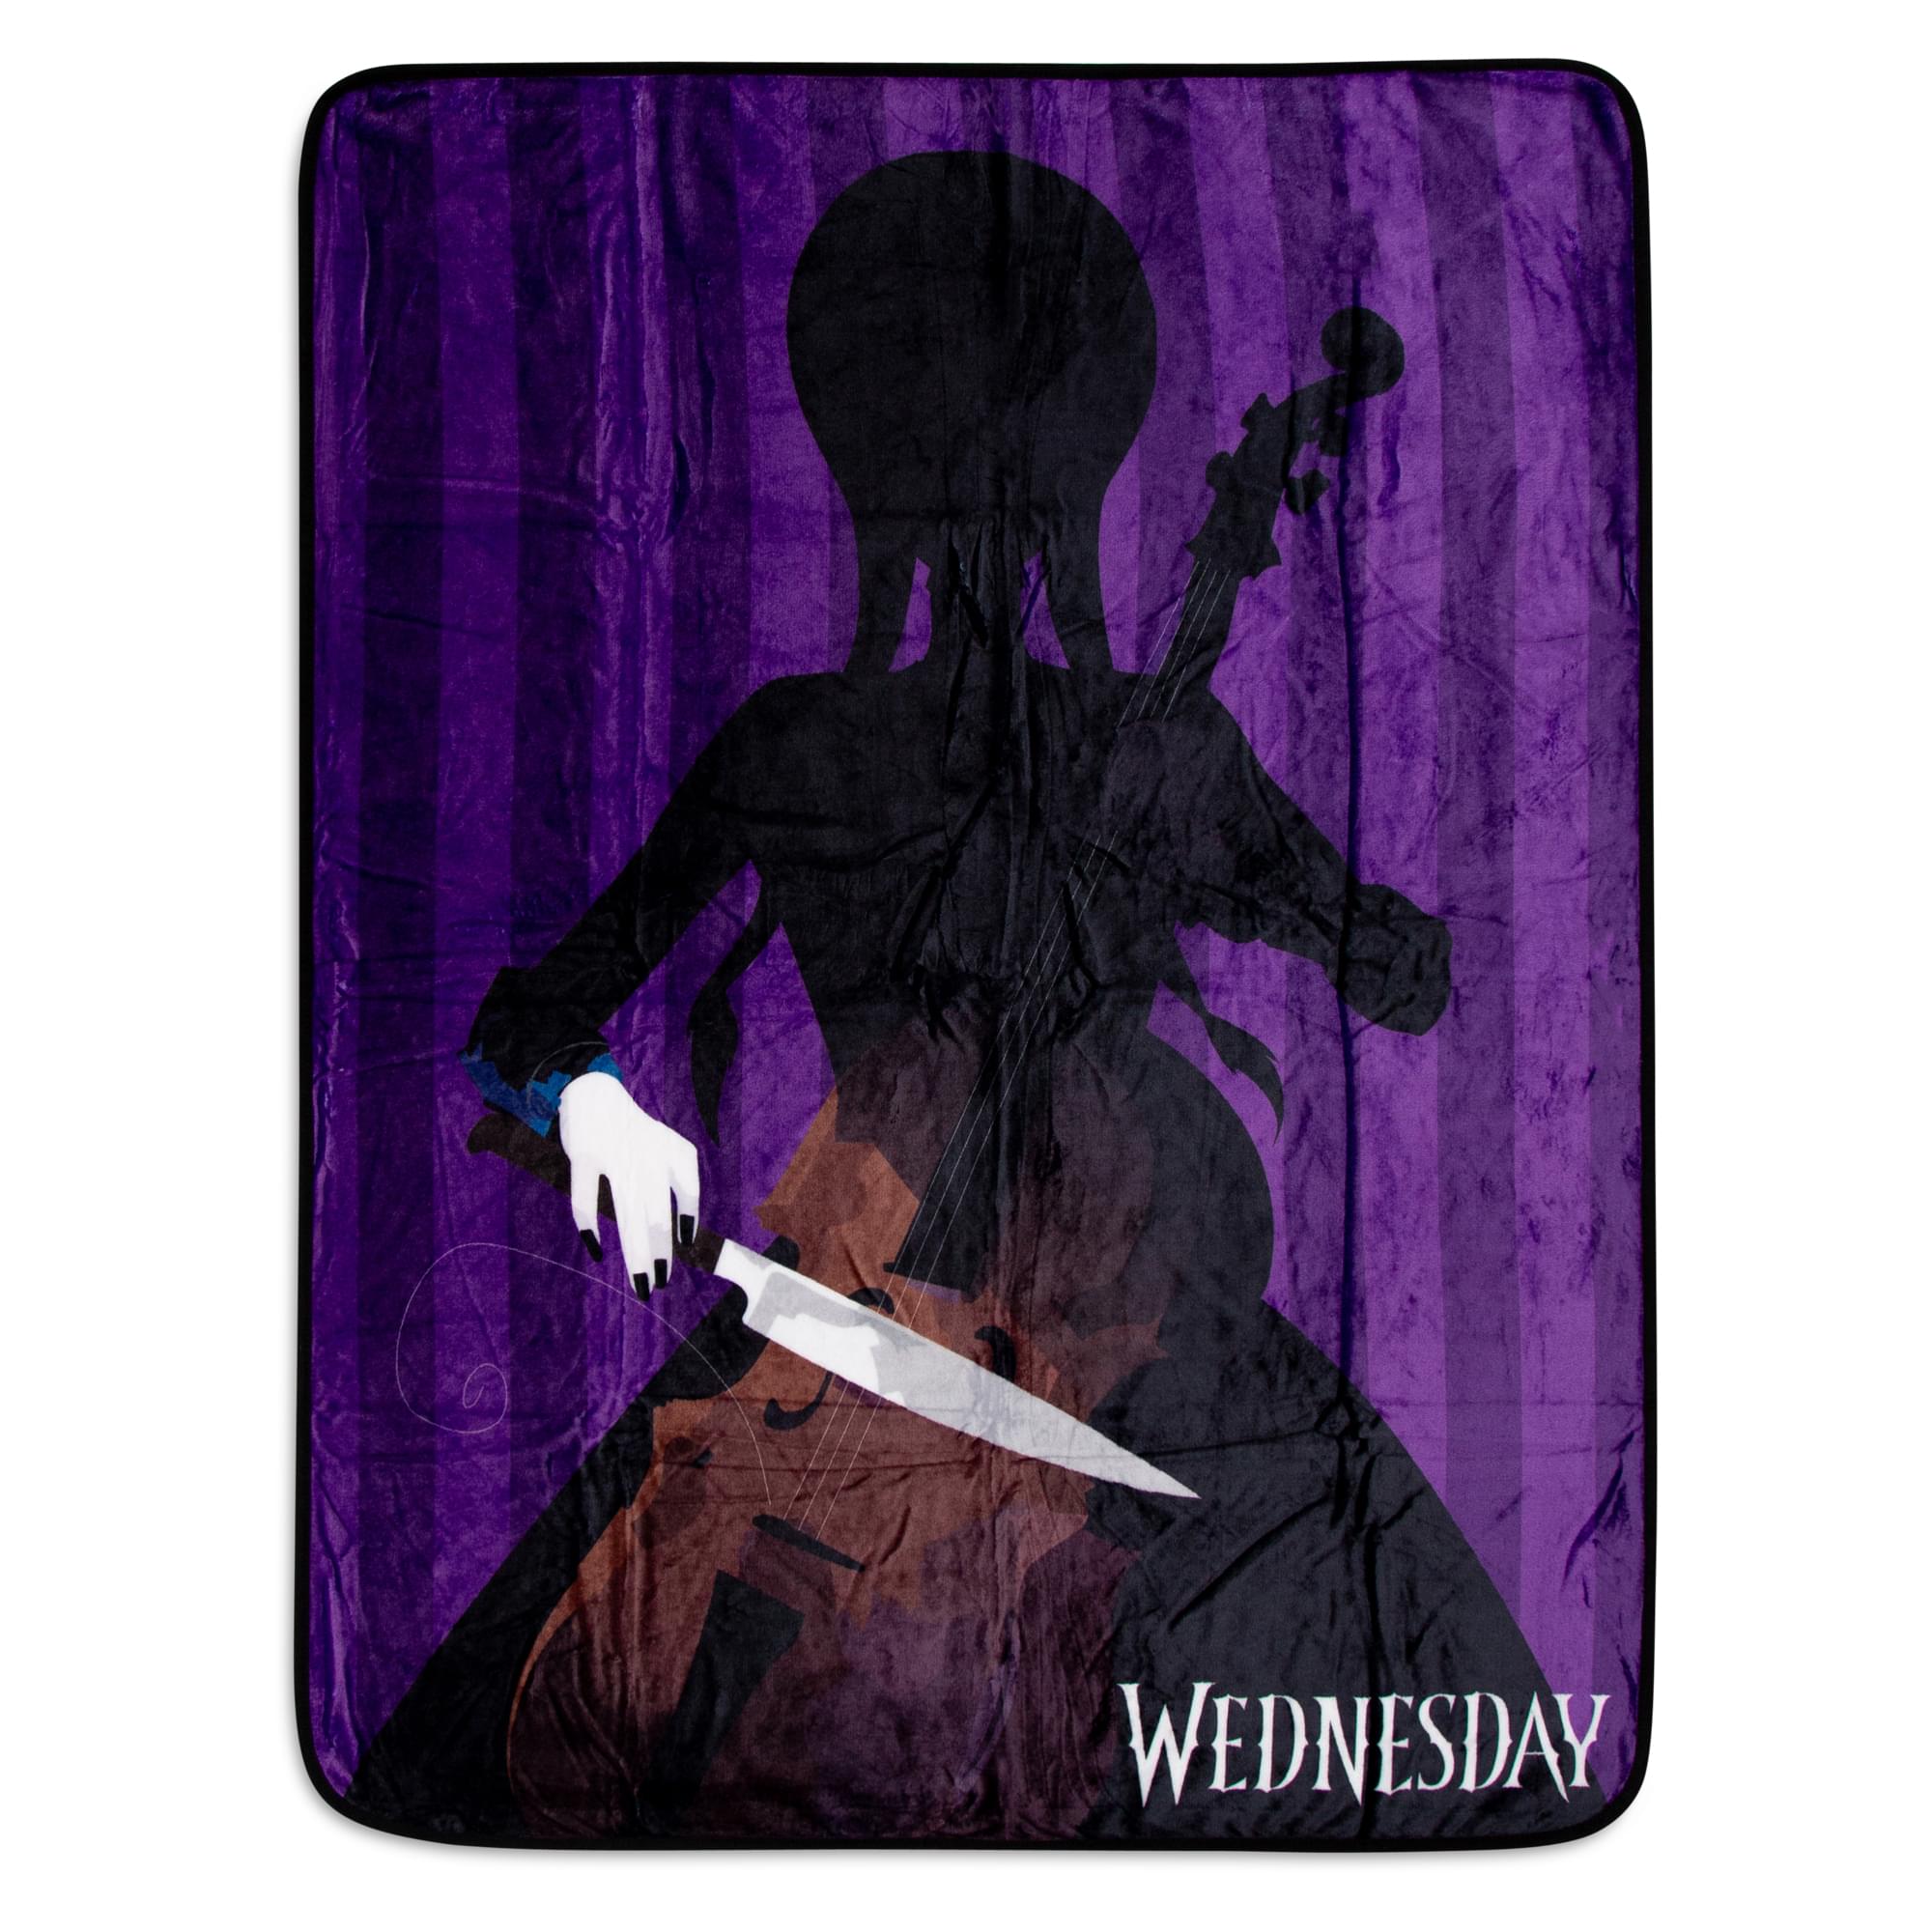 Addams Family Wednesday Cello Silhouette Fleece Throw Blanket , 45 X 60 Inches